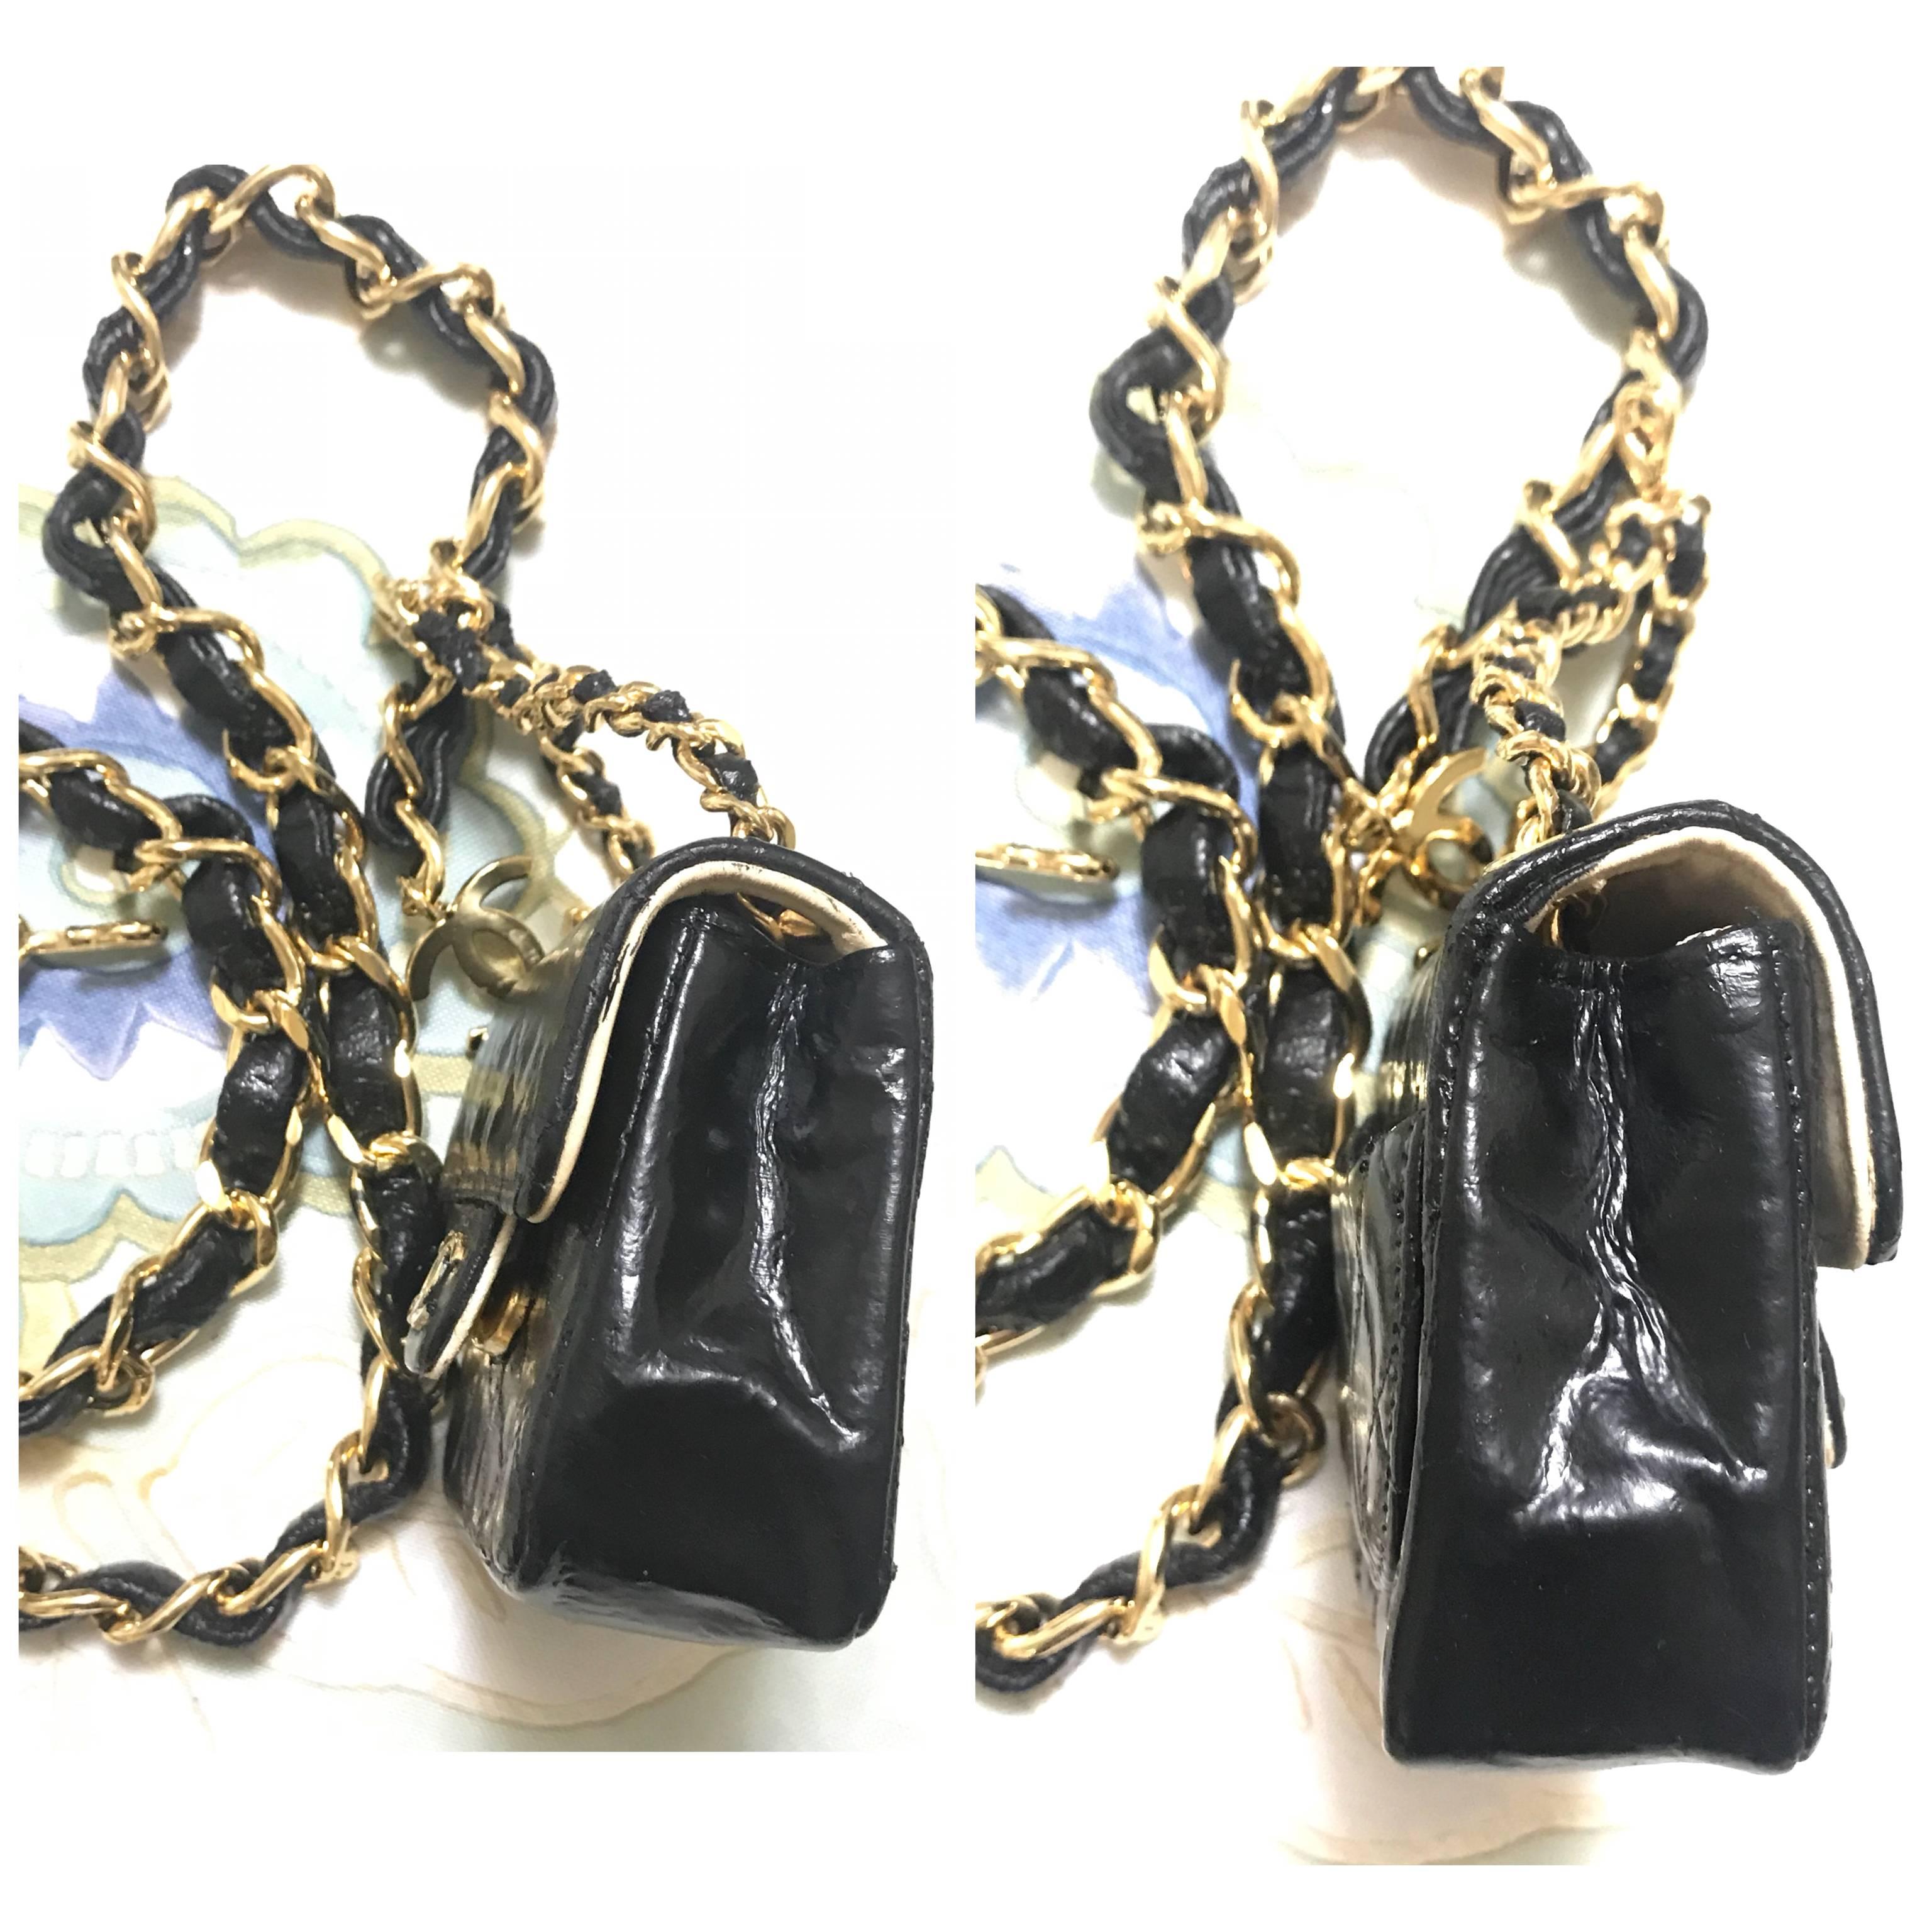 Vintage CHANEL mini 2.55 bag charm chain leather belt with golden CC charm. 1